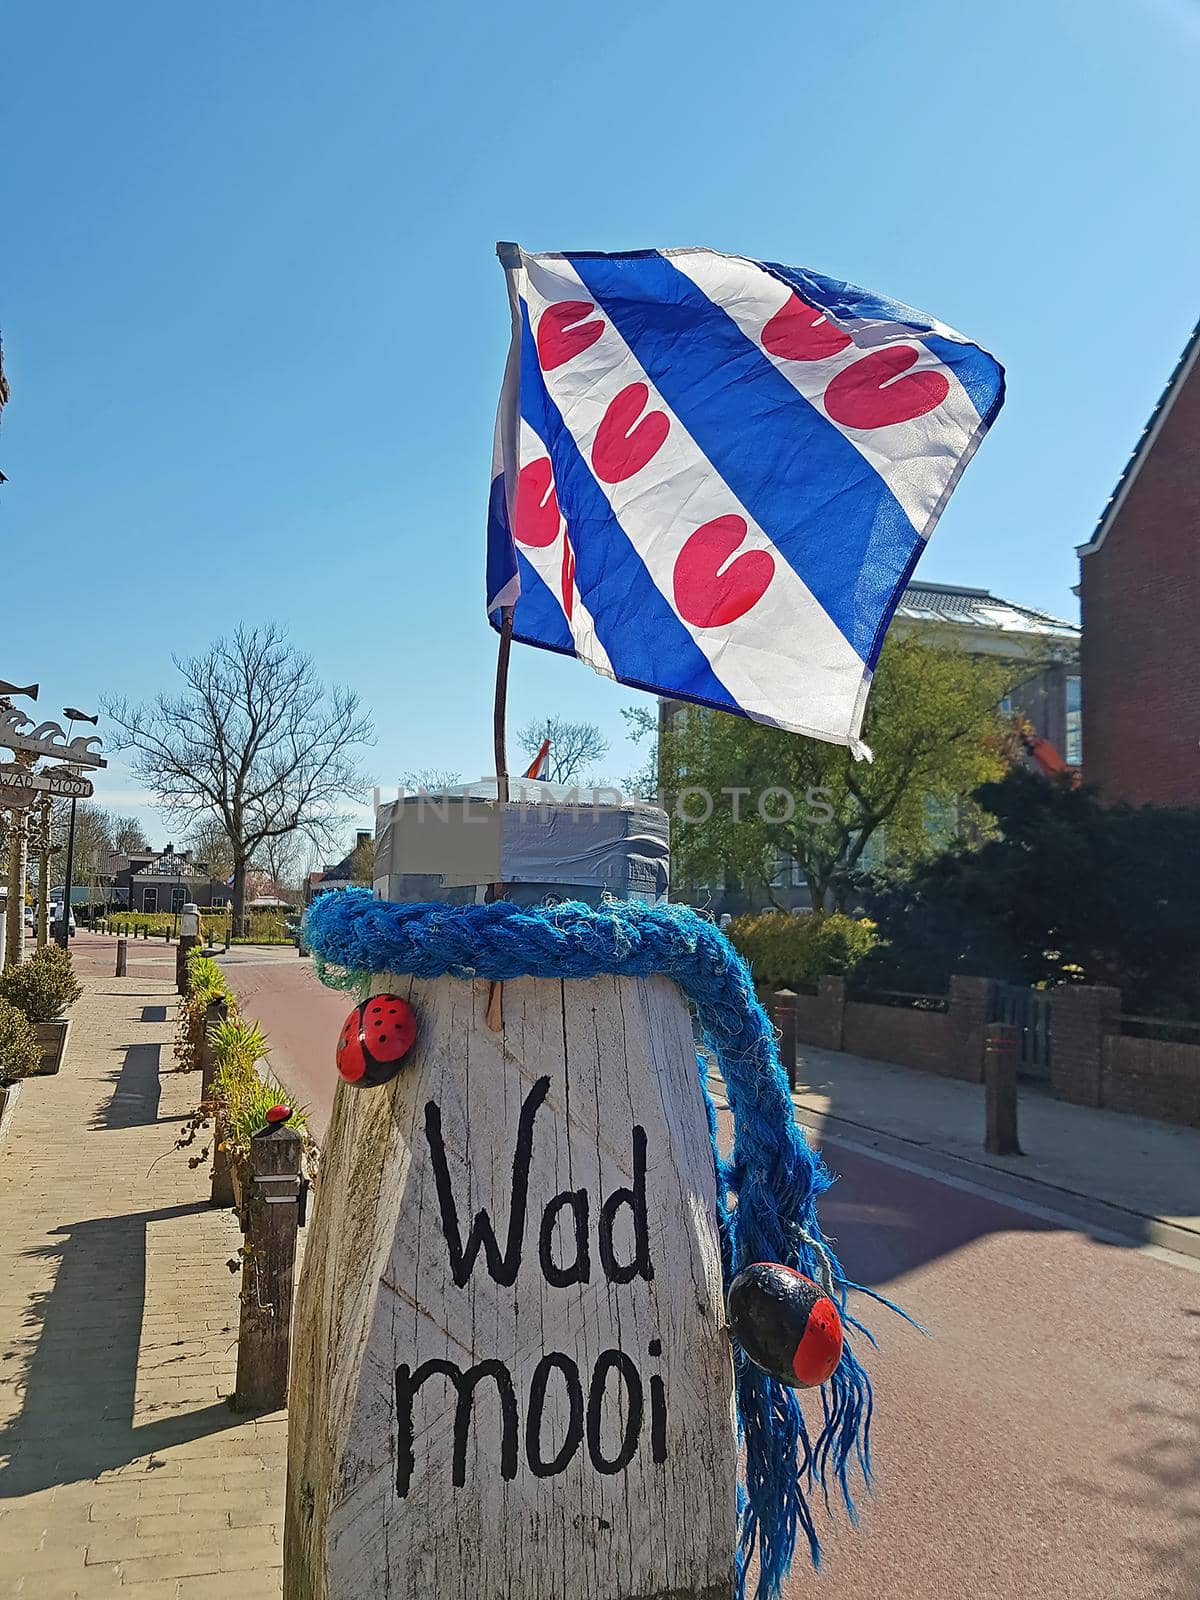 The frisian flag on a pole with the words 'Wad Mooi'